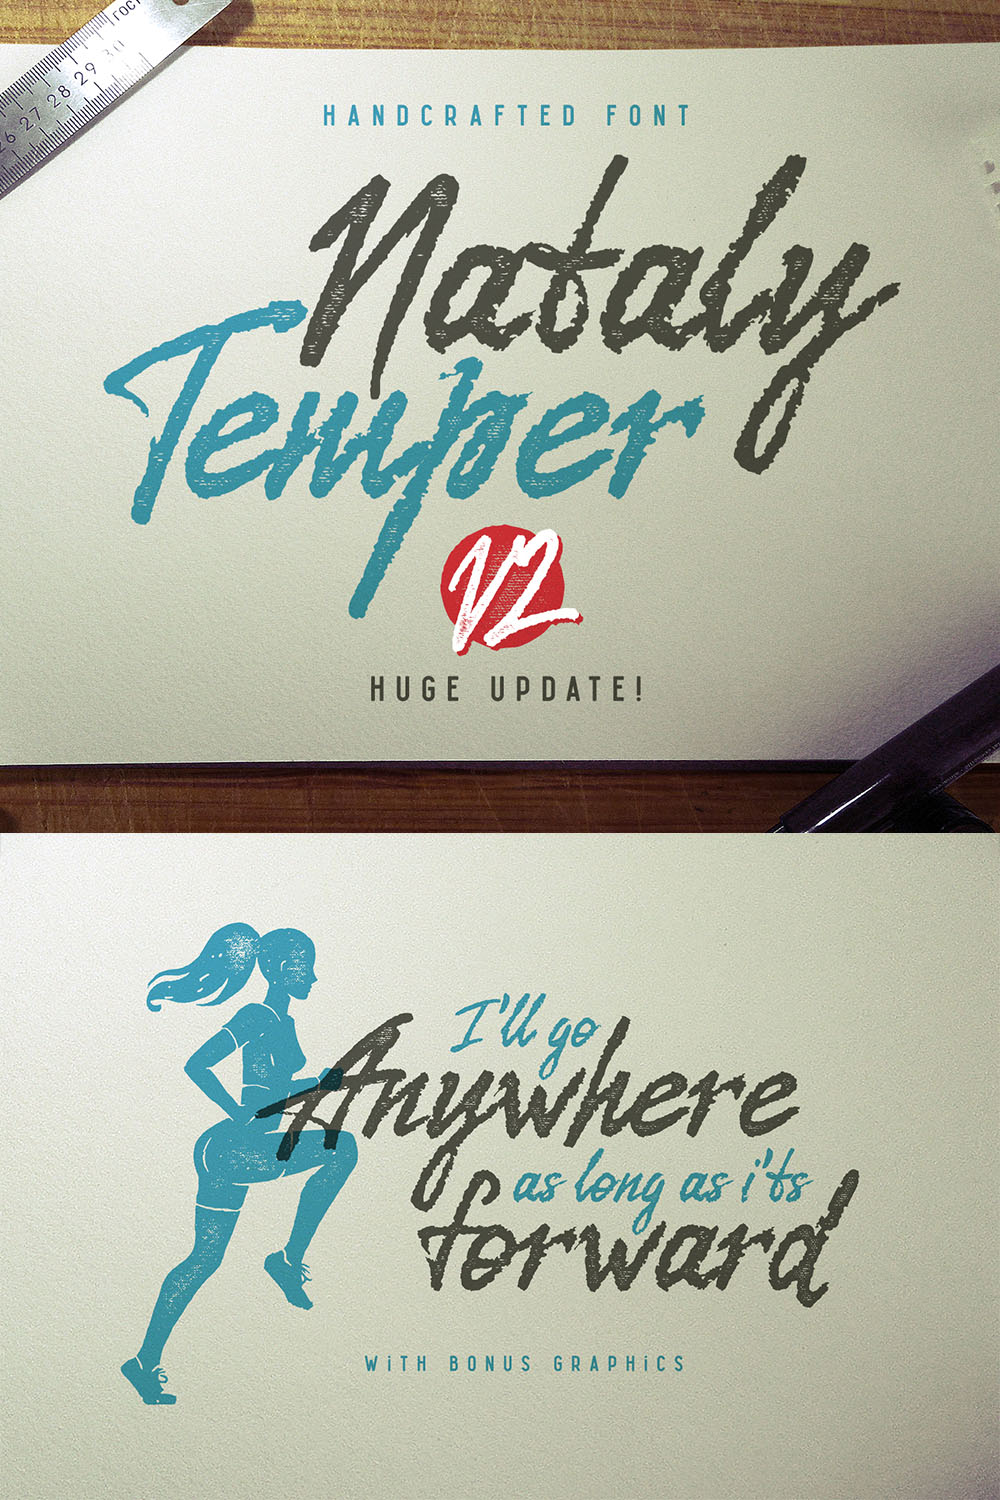 Nataly Temper V.2 Update - pinterest image preview.